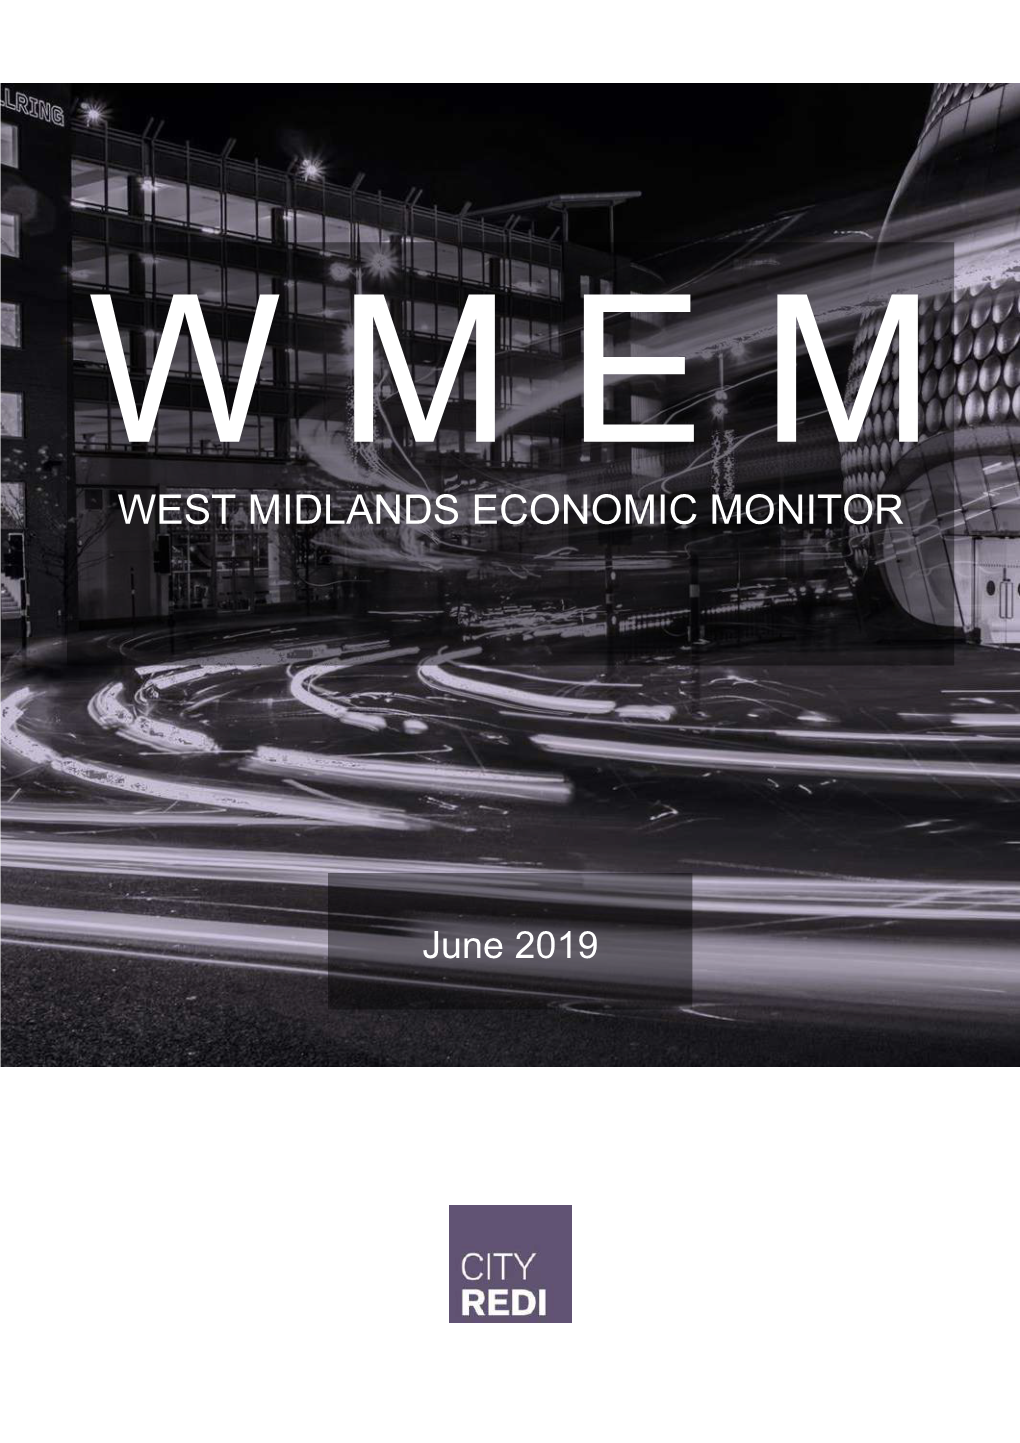 West Midlands Economic Monitor